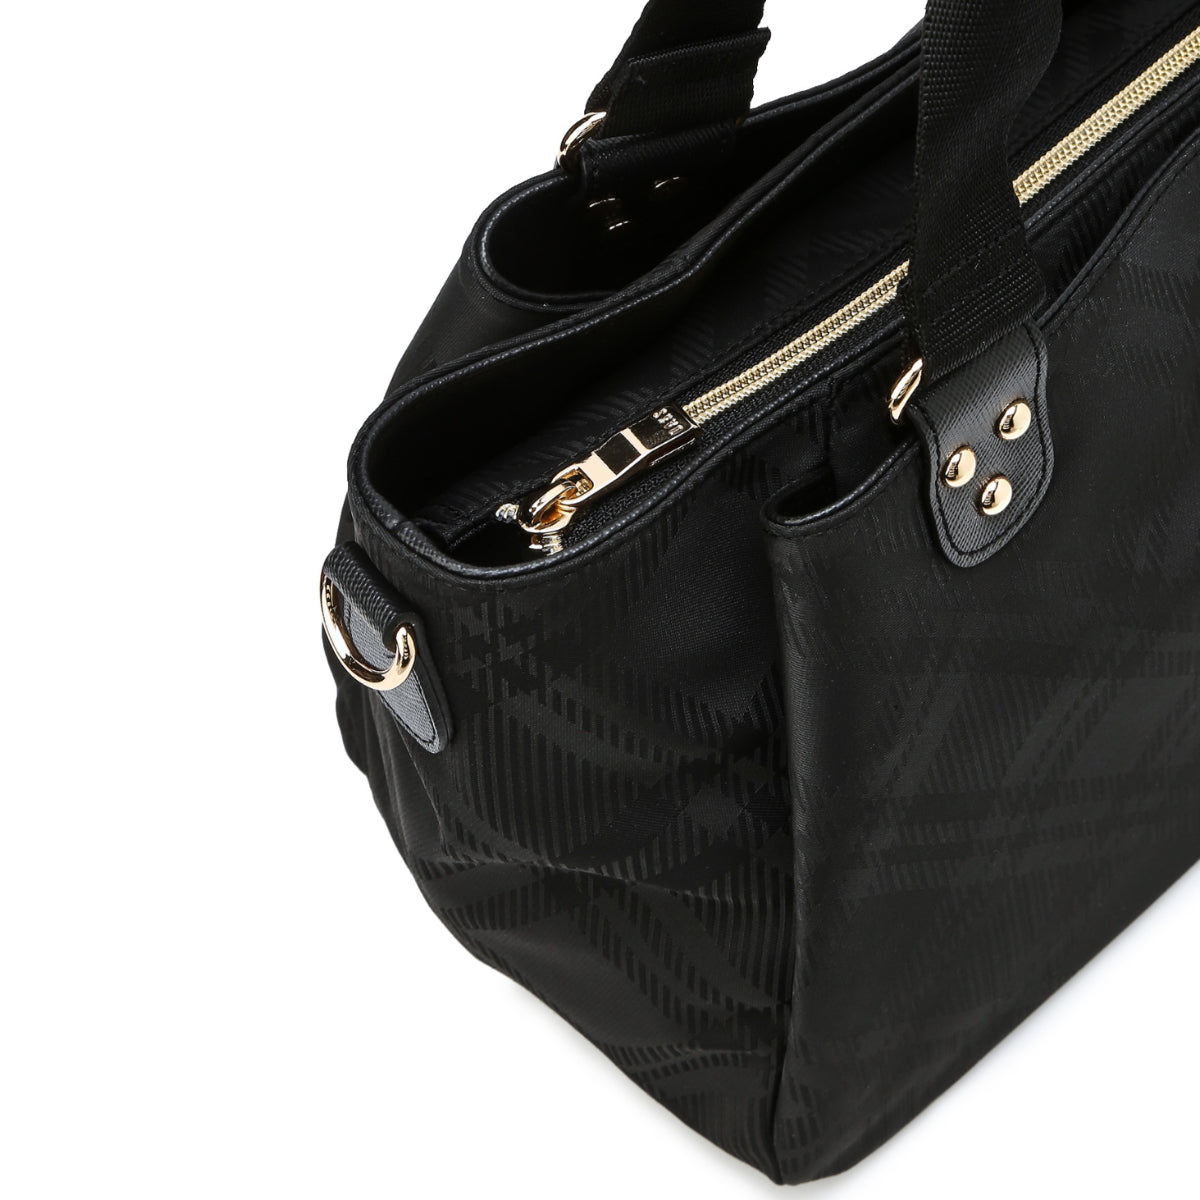 DAKS Black House Check Lightweight Tote Bag with Detachable Shoulder Strap Shoulder Crossbody Bag / from Seoul, Korea